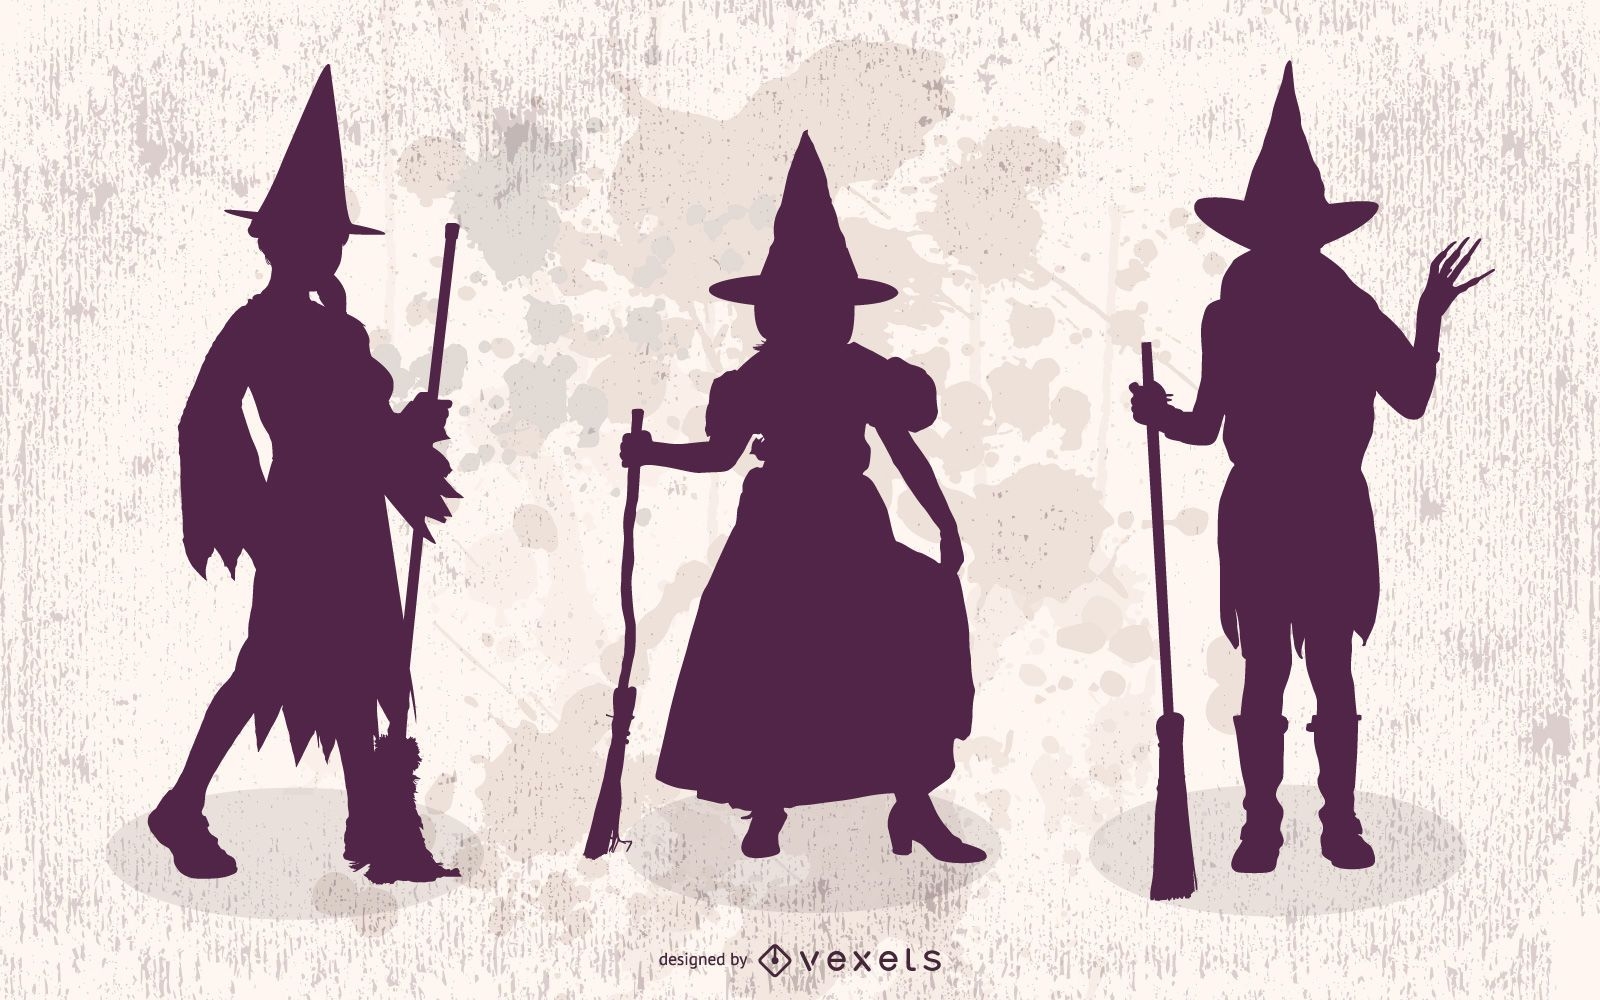 3 chicas en disfraces de brujas de Halloween